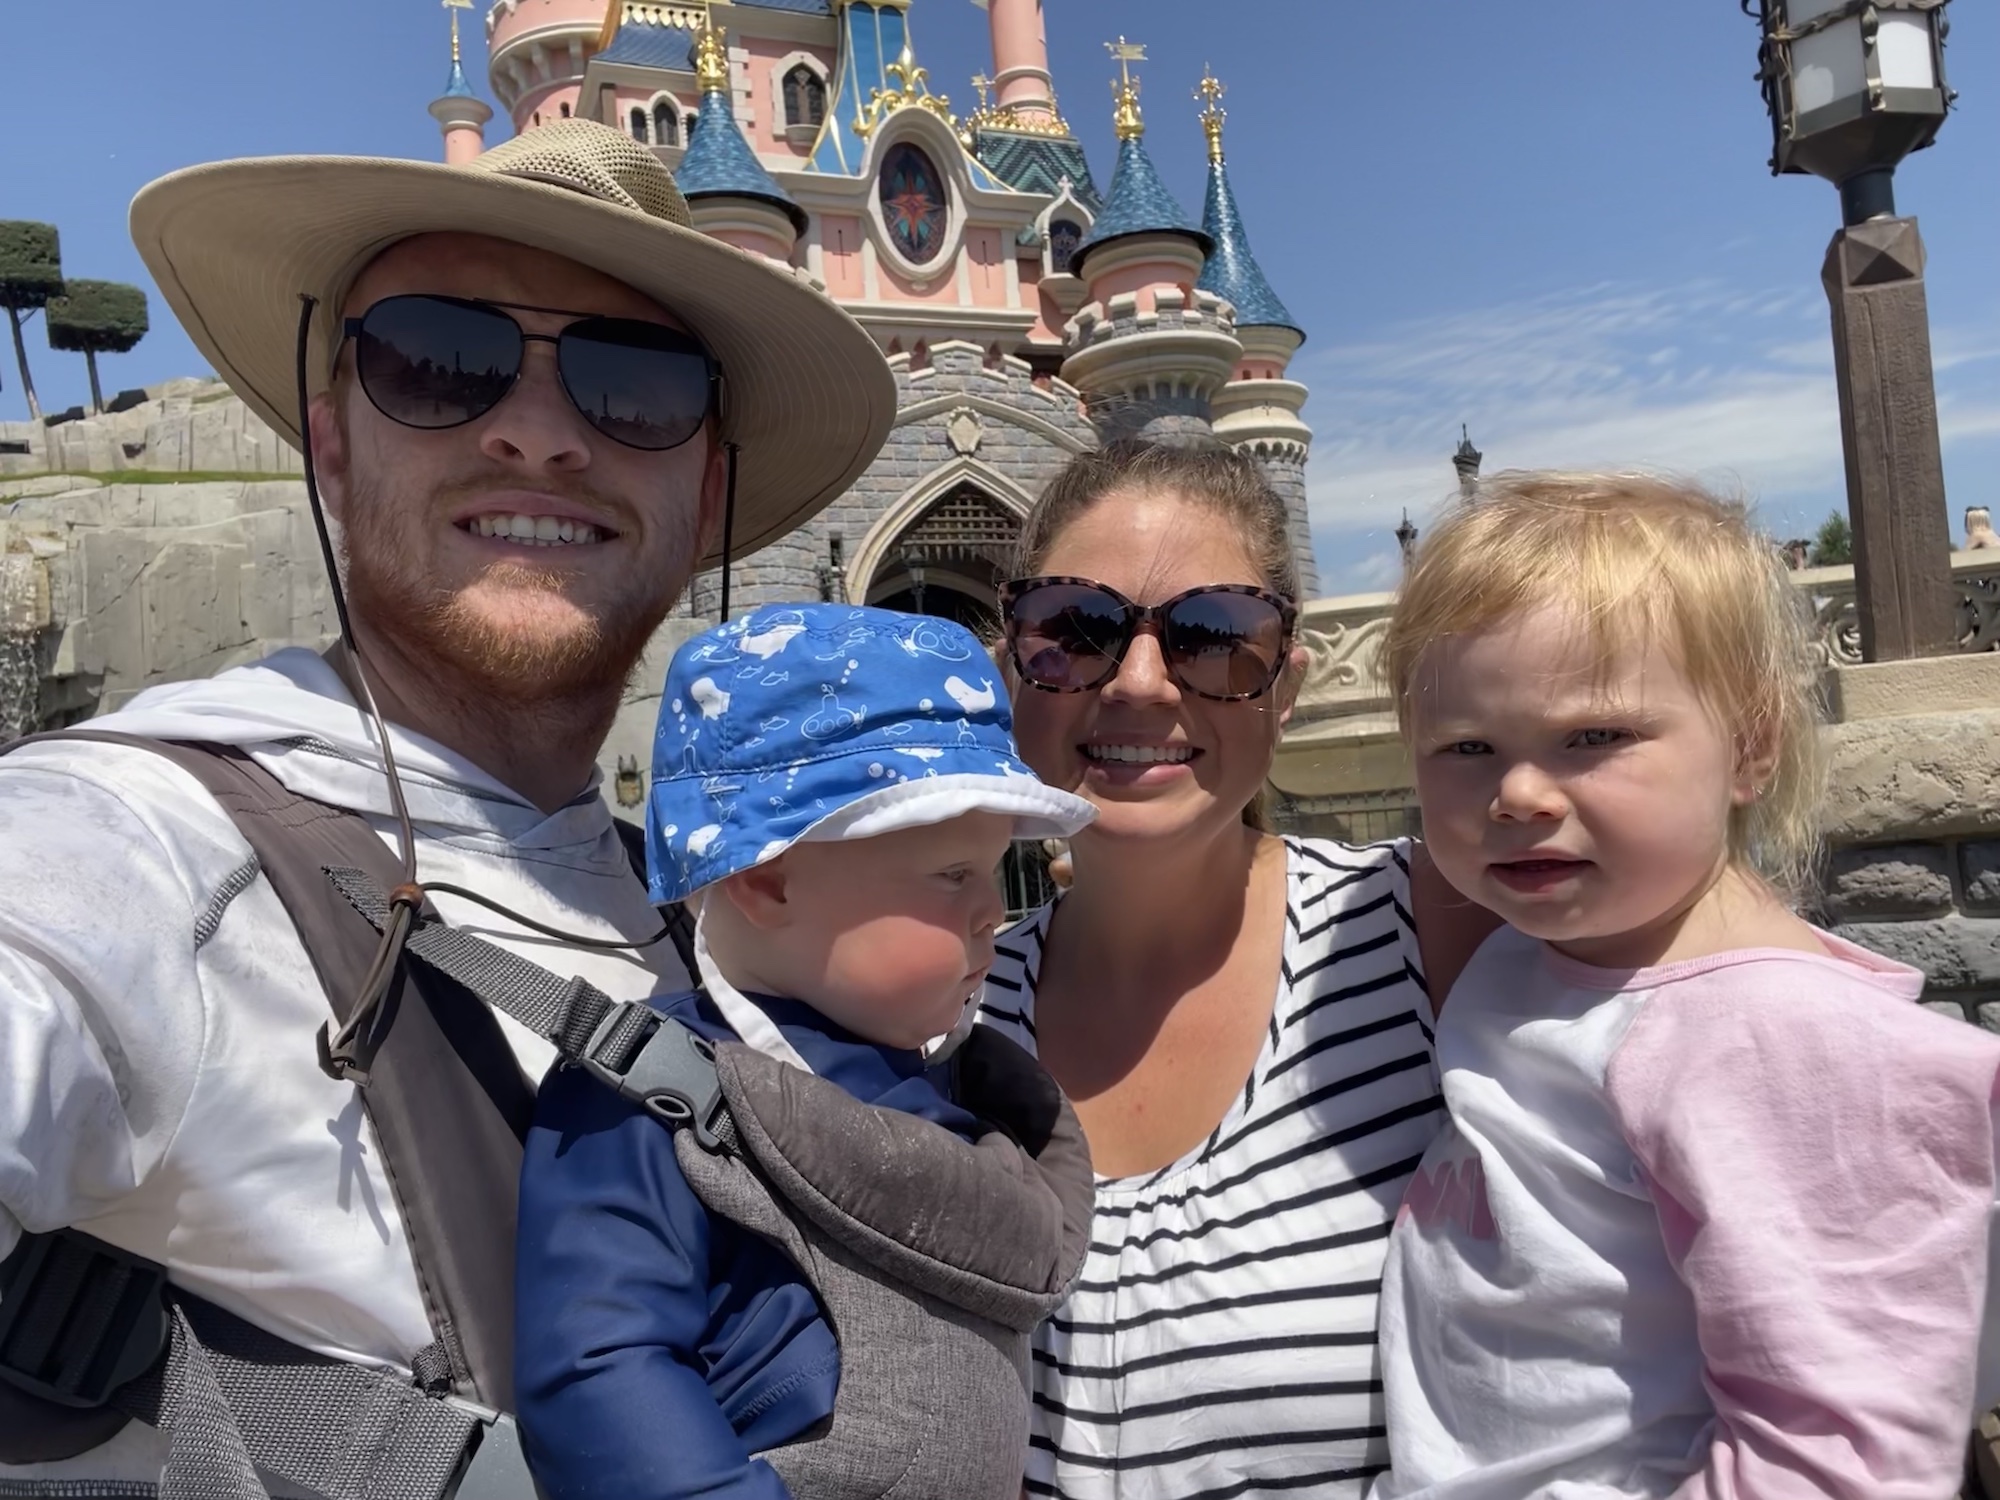 Disneyland Paris - tickets, deals, family holidays